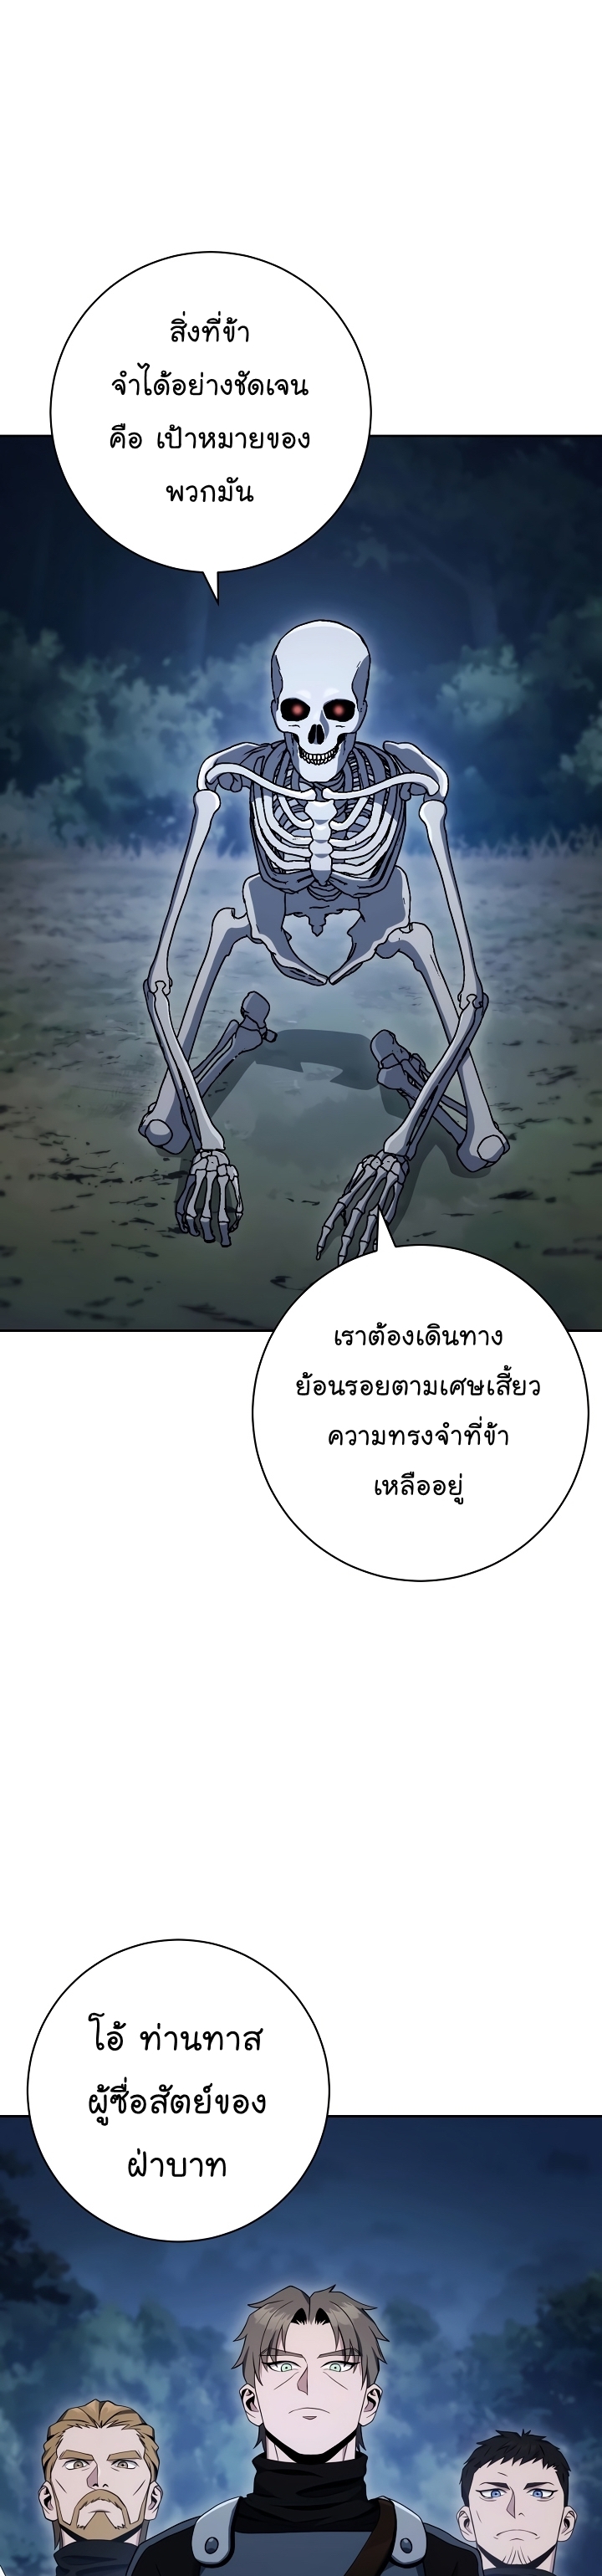 Skeleton Soldier 202 10